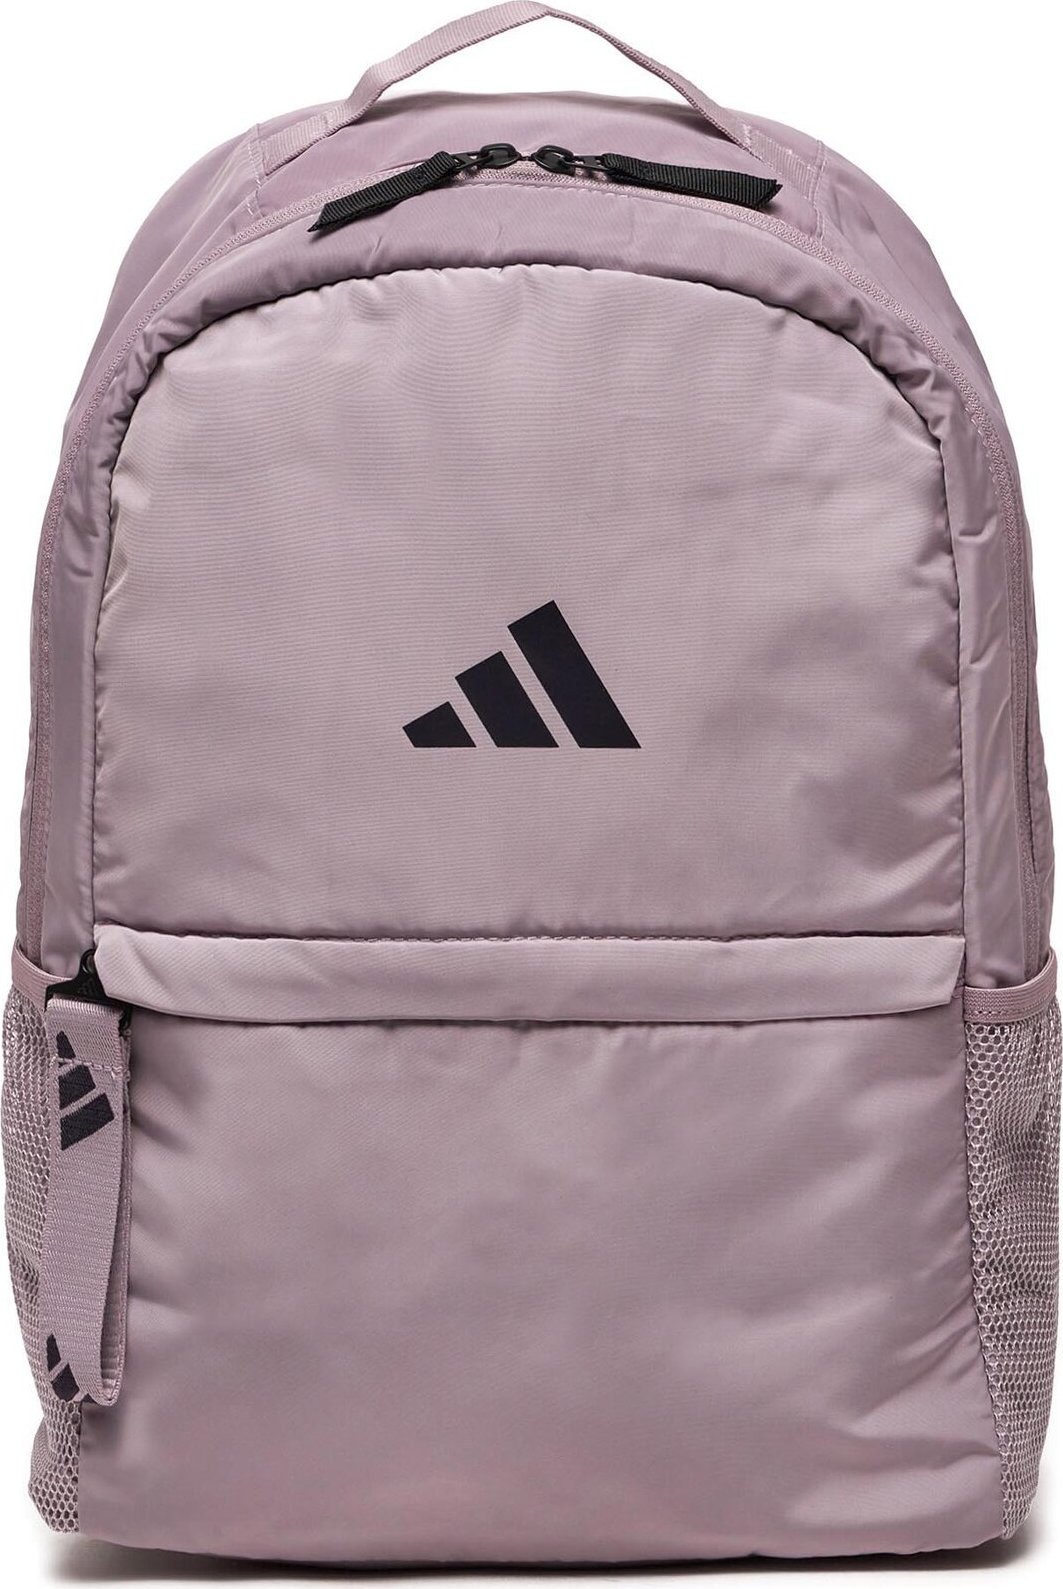 Batoh adidas Sport Padded Backpack IR9935 Prlofi/Aurbla/Black